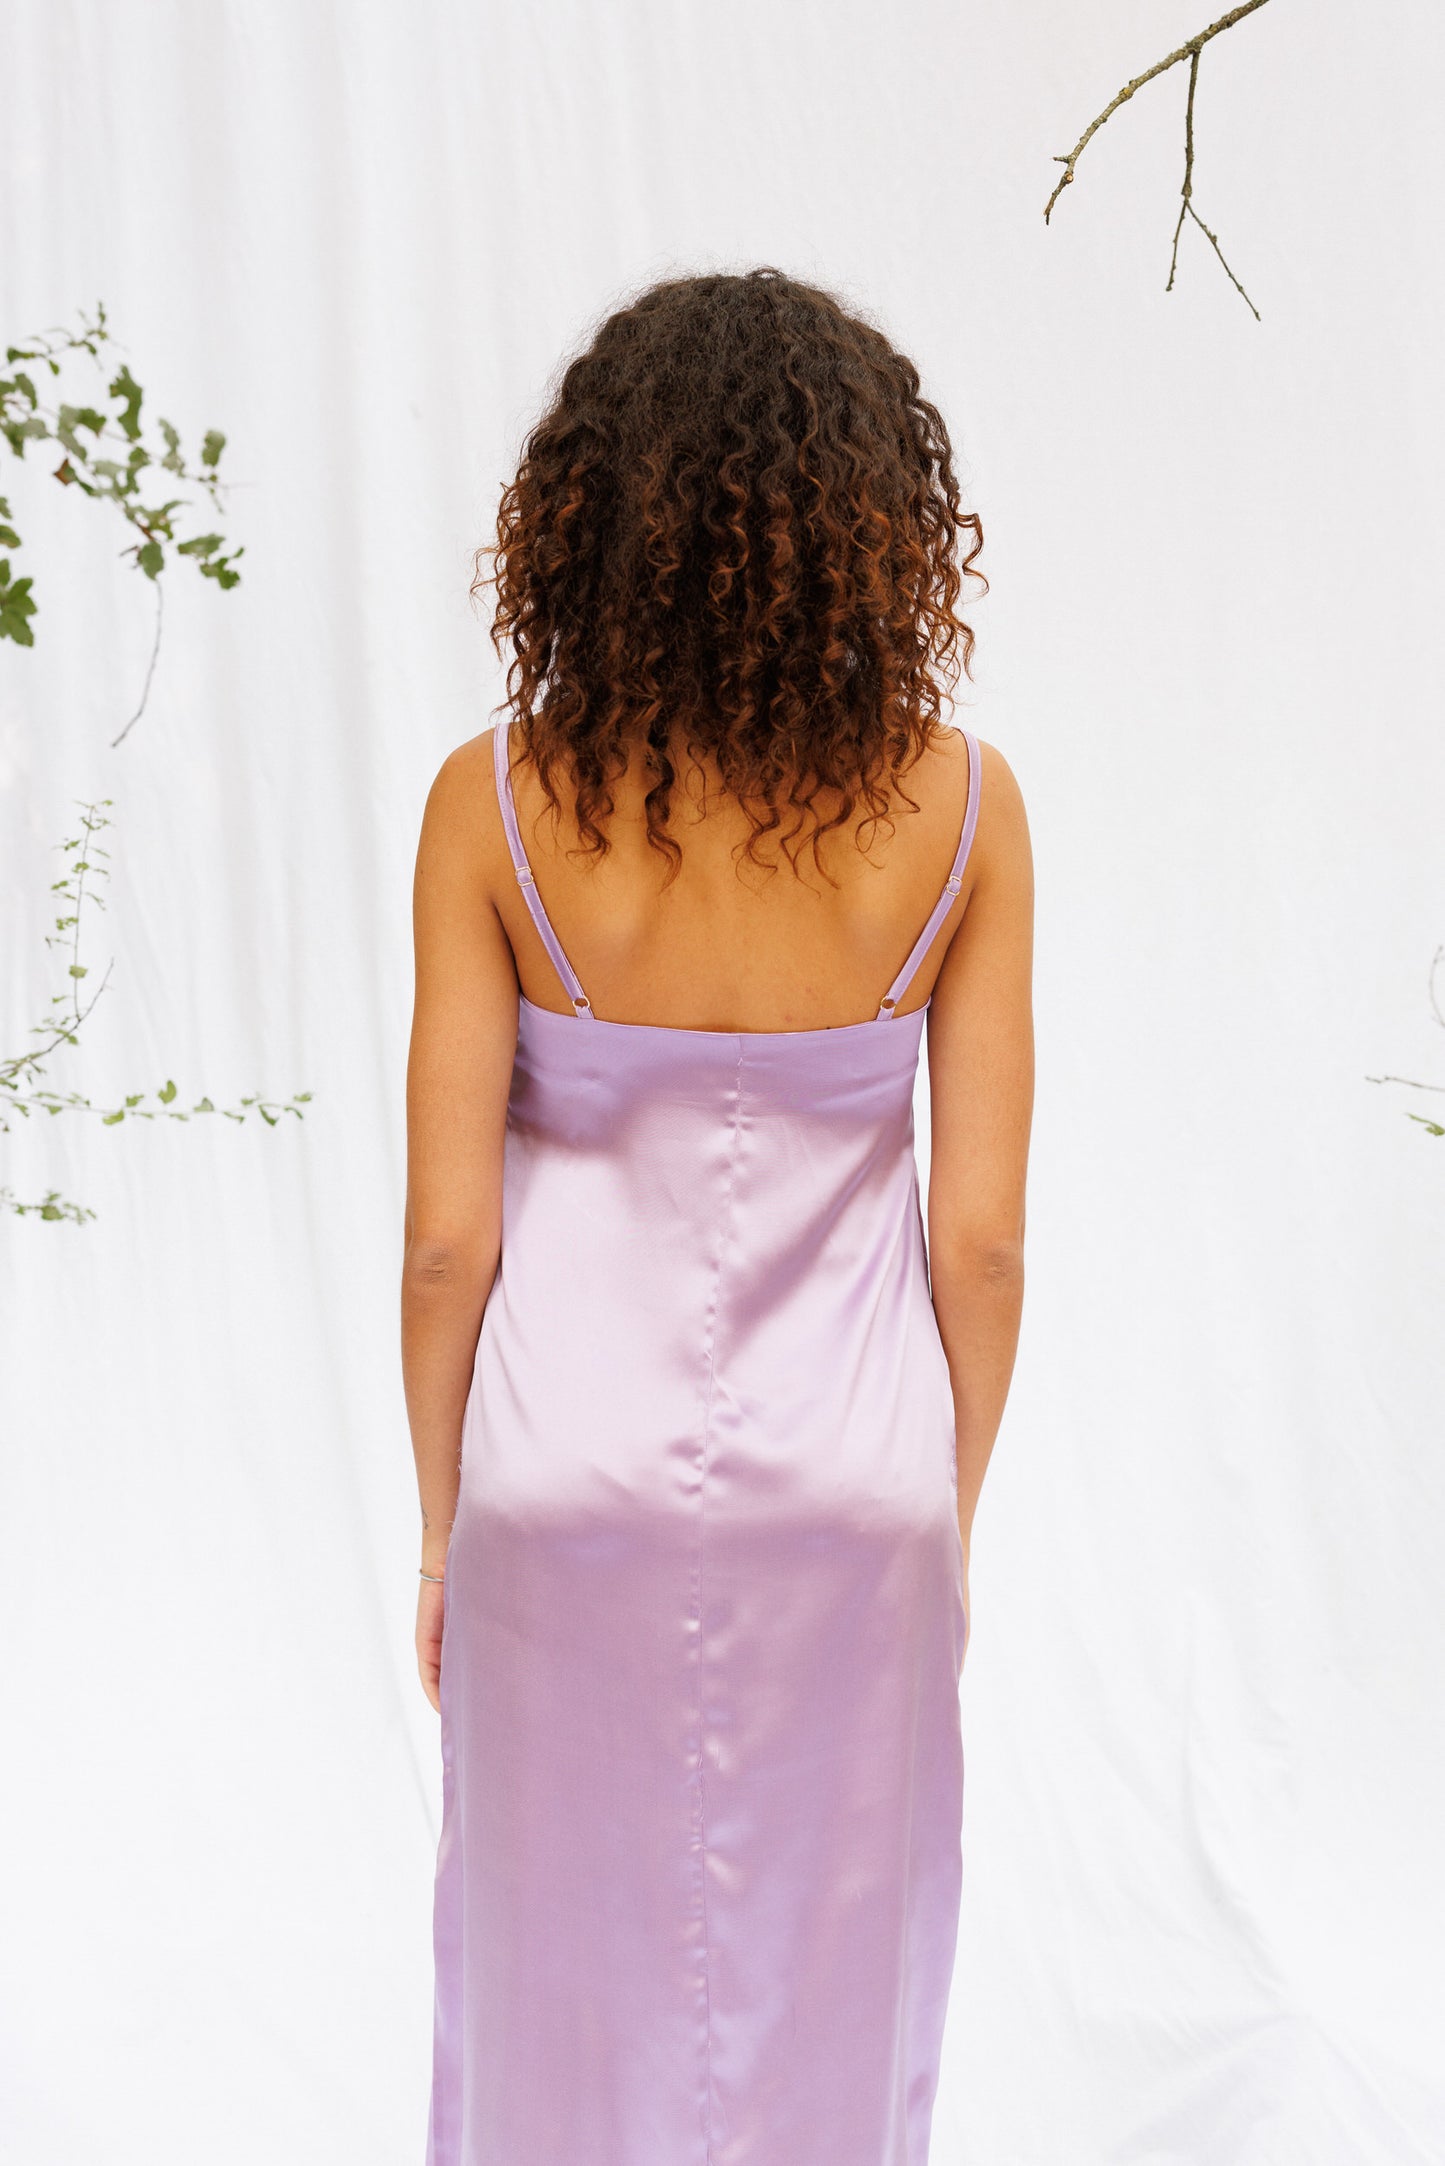 Back close image of Maria wearing purple slip dress